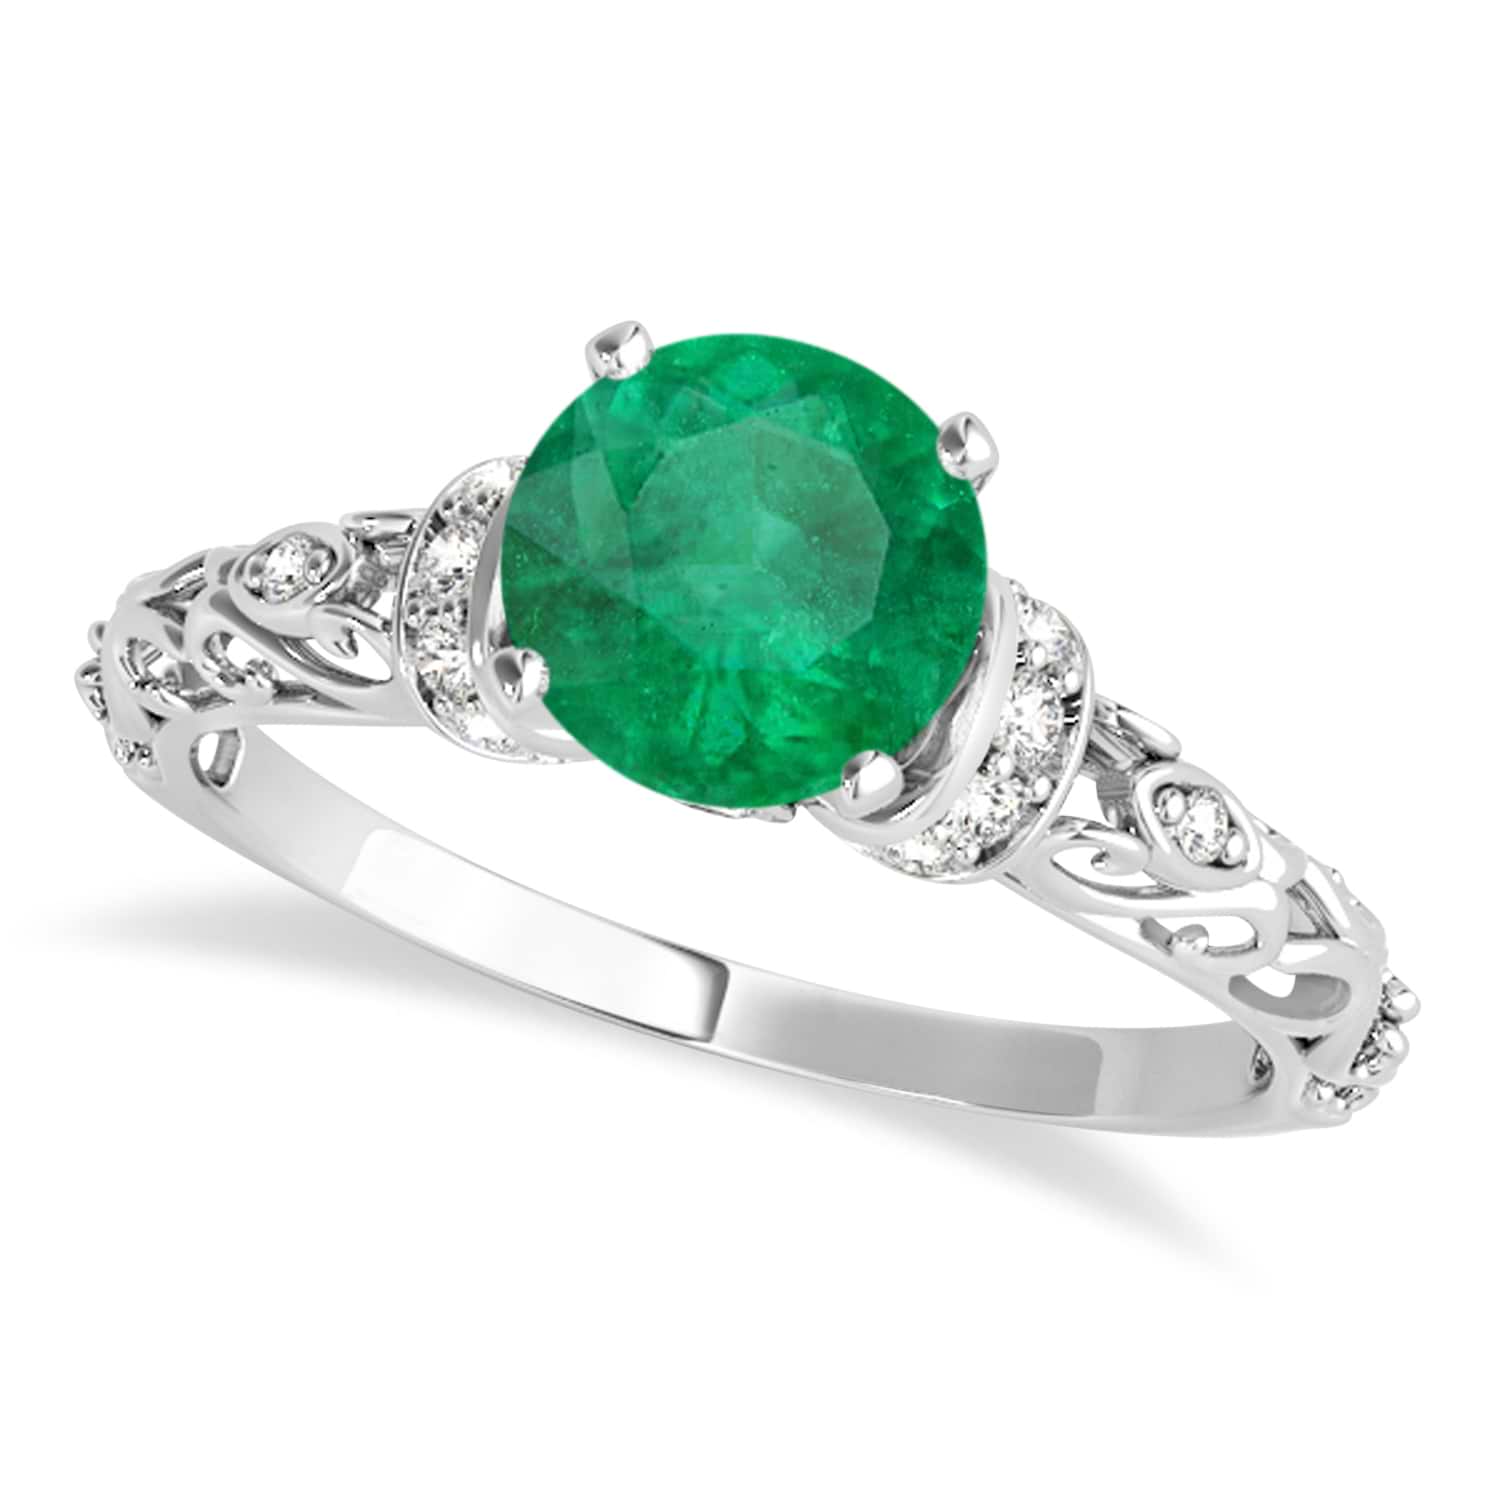 Emerald & Diamond Antique Style Engagement Ring 18k White Gold (0.87ct)